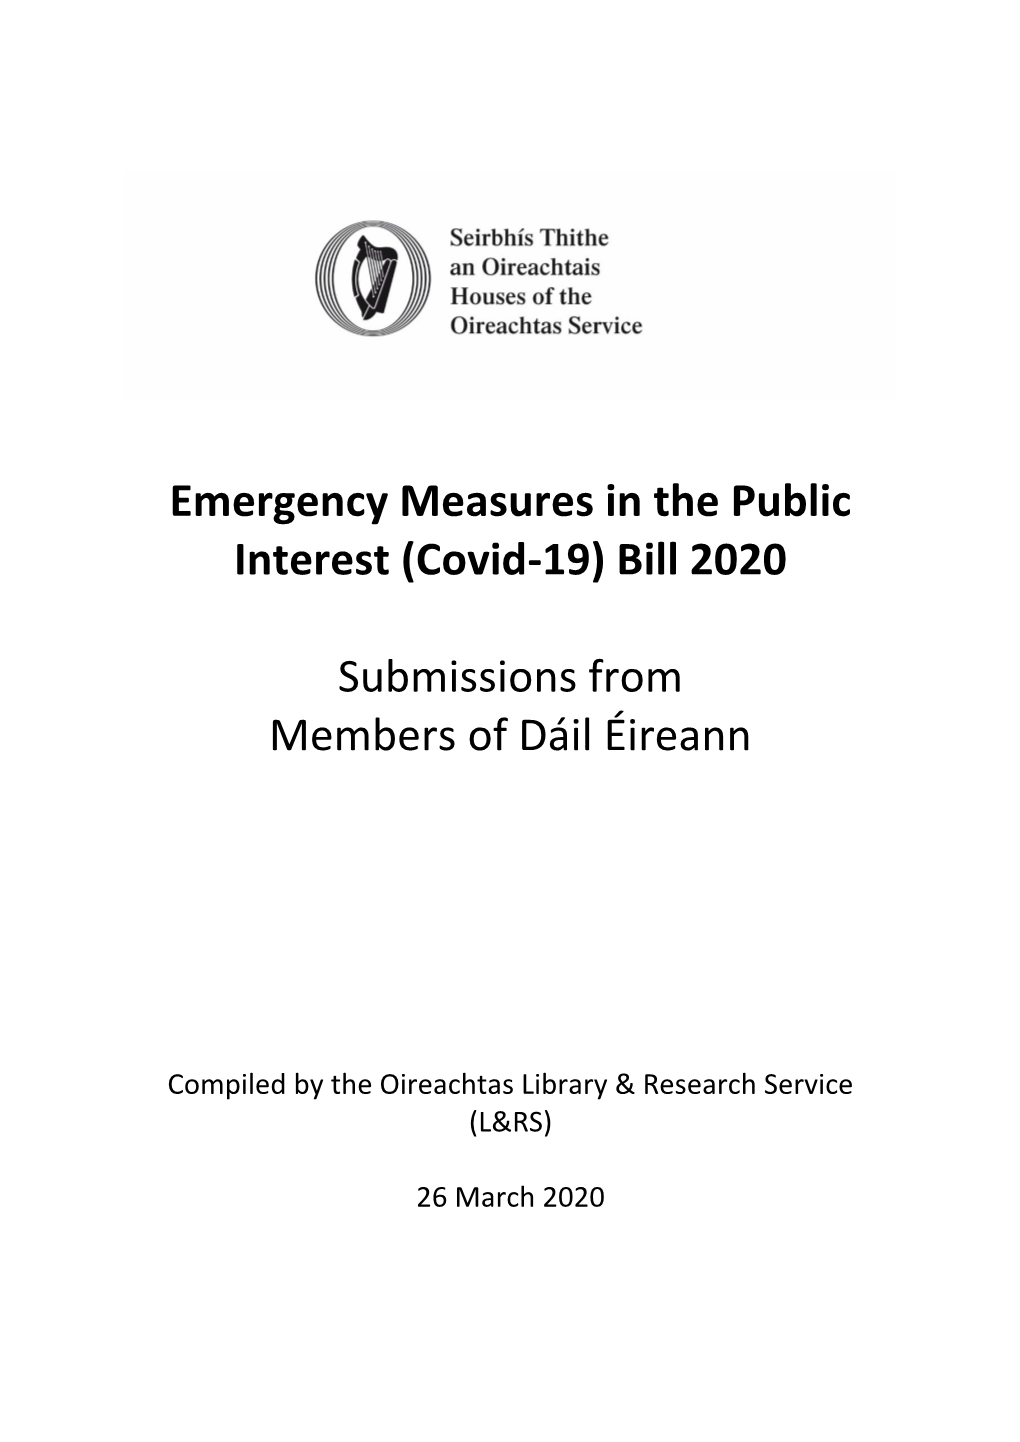 Emergency Measures in the Public Interest (Covid-19) Bill 2020